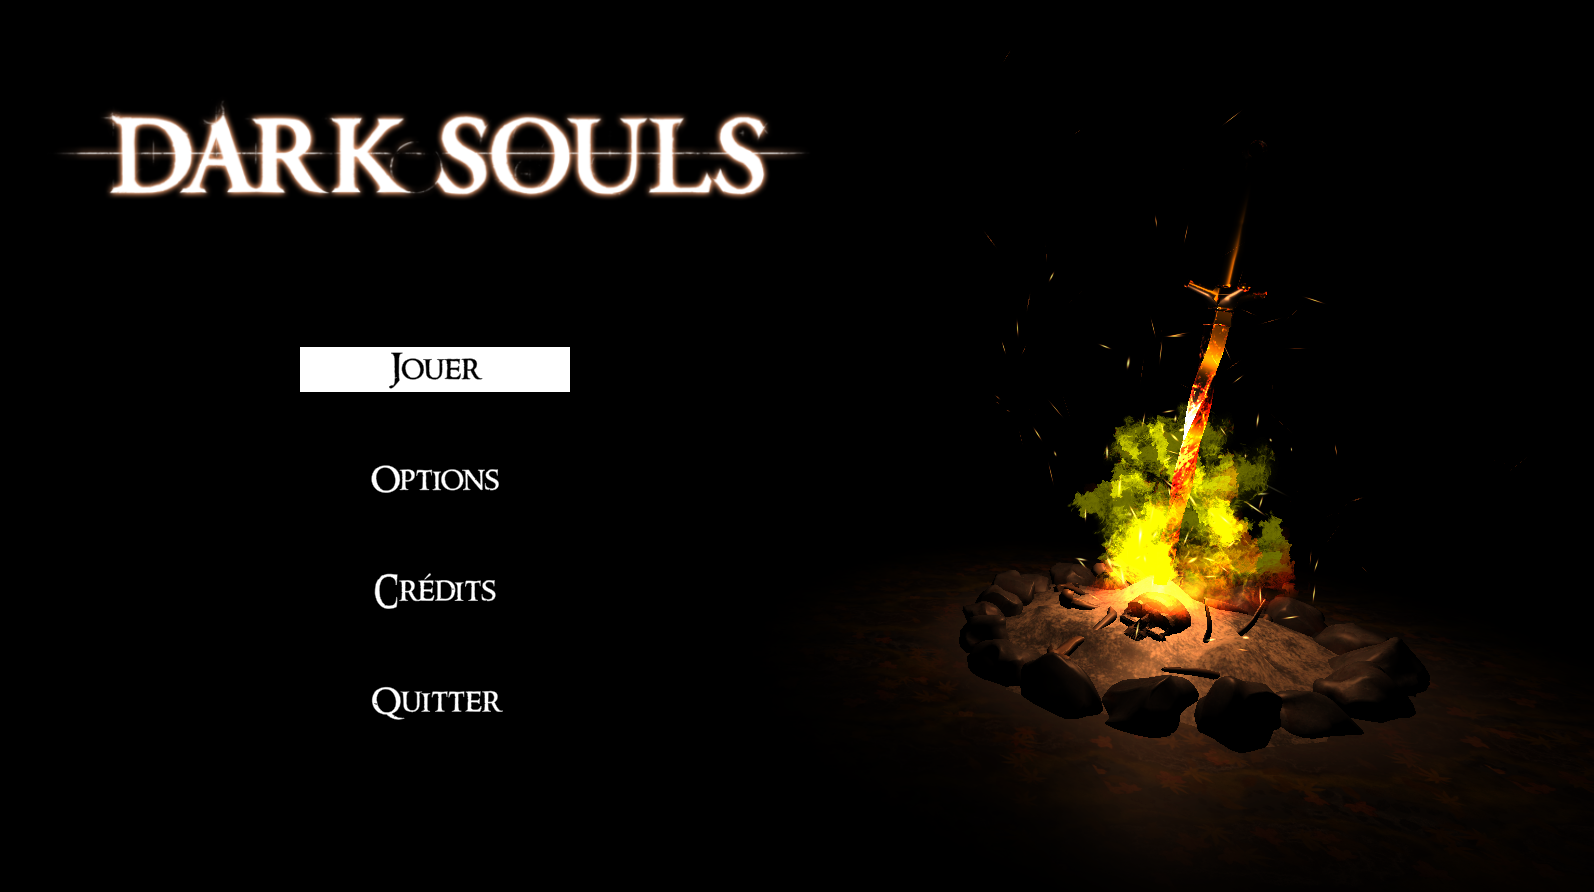 Дарк соулс коды. Главное меню дарк соулс 1. Dark Souls 3 главное меню. Дарк соулс 2 главное меню. Главное меню дарк соулс 3.